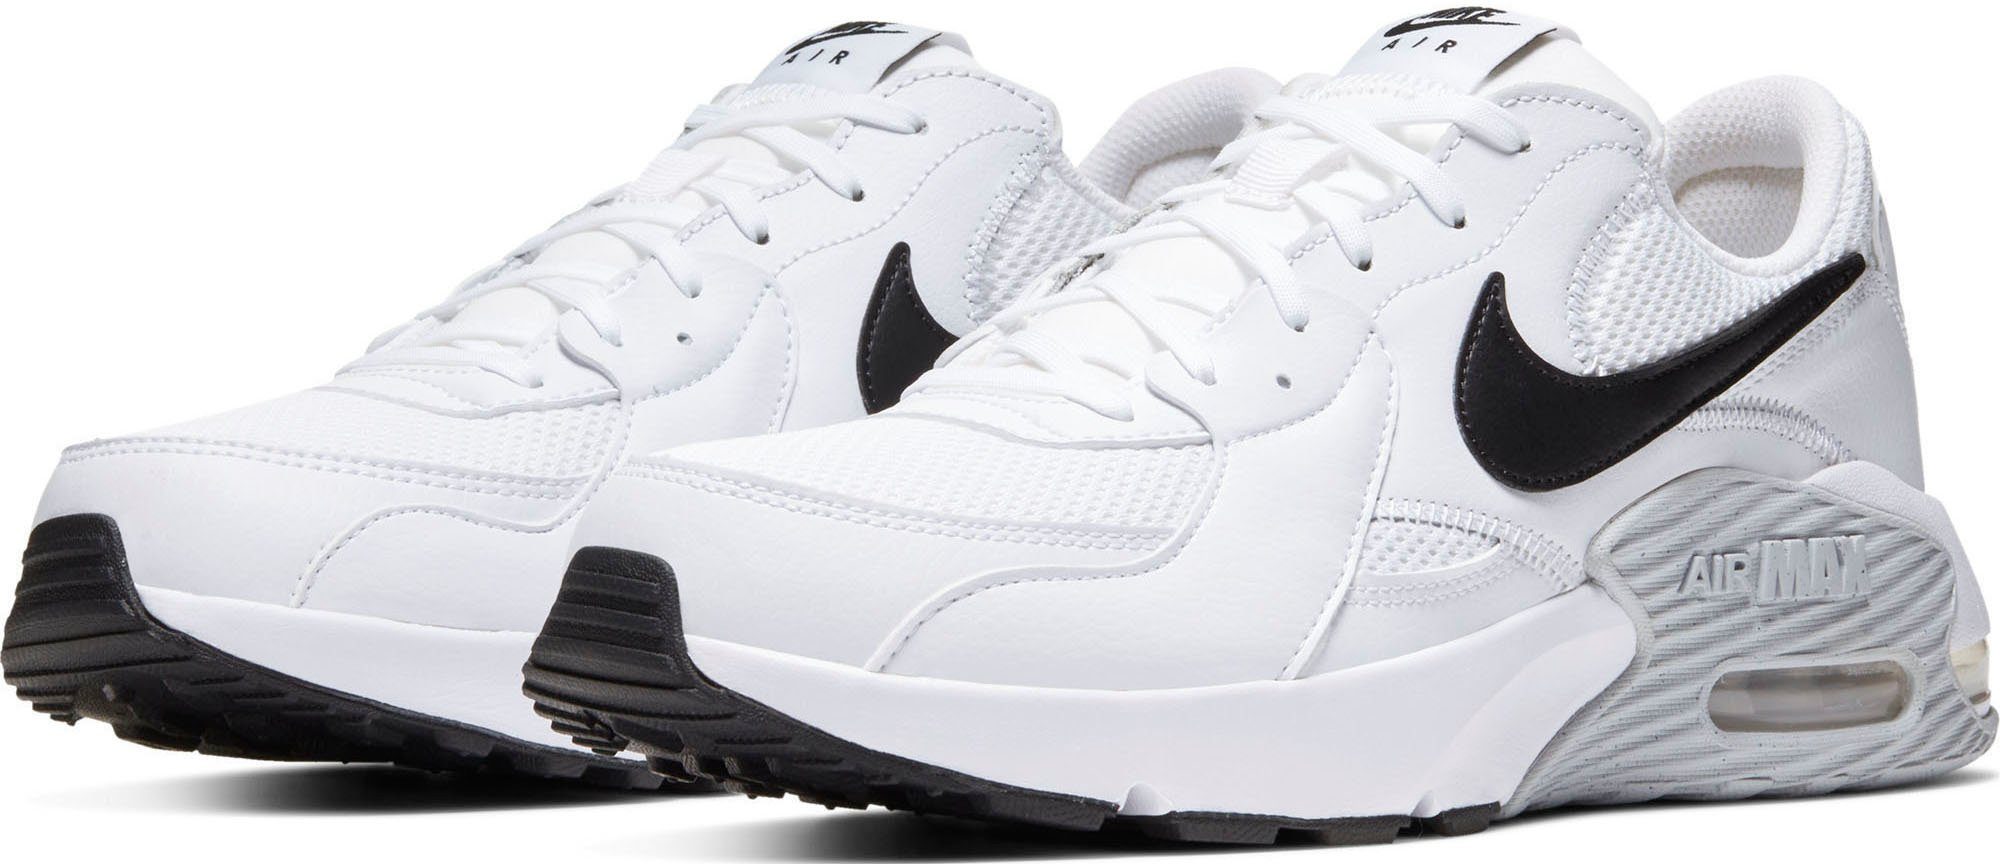 Nike Sportswear »Air Max Excee« Sneaker kaufen | OTTO